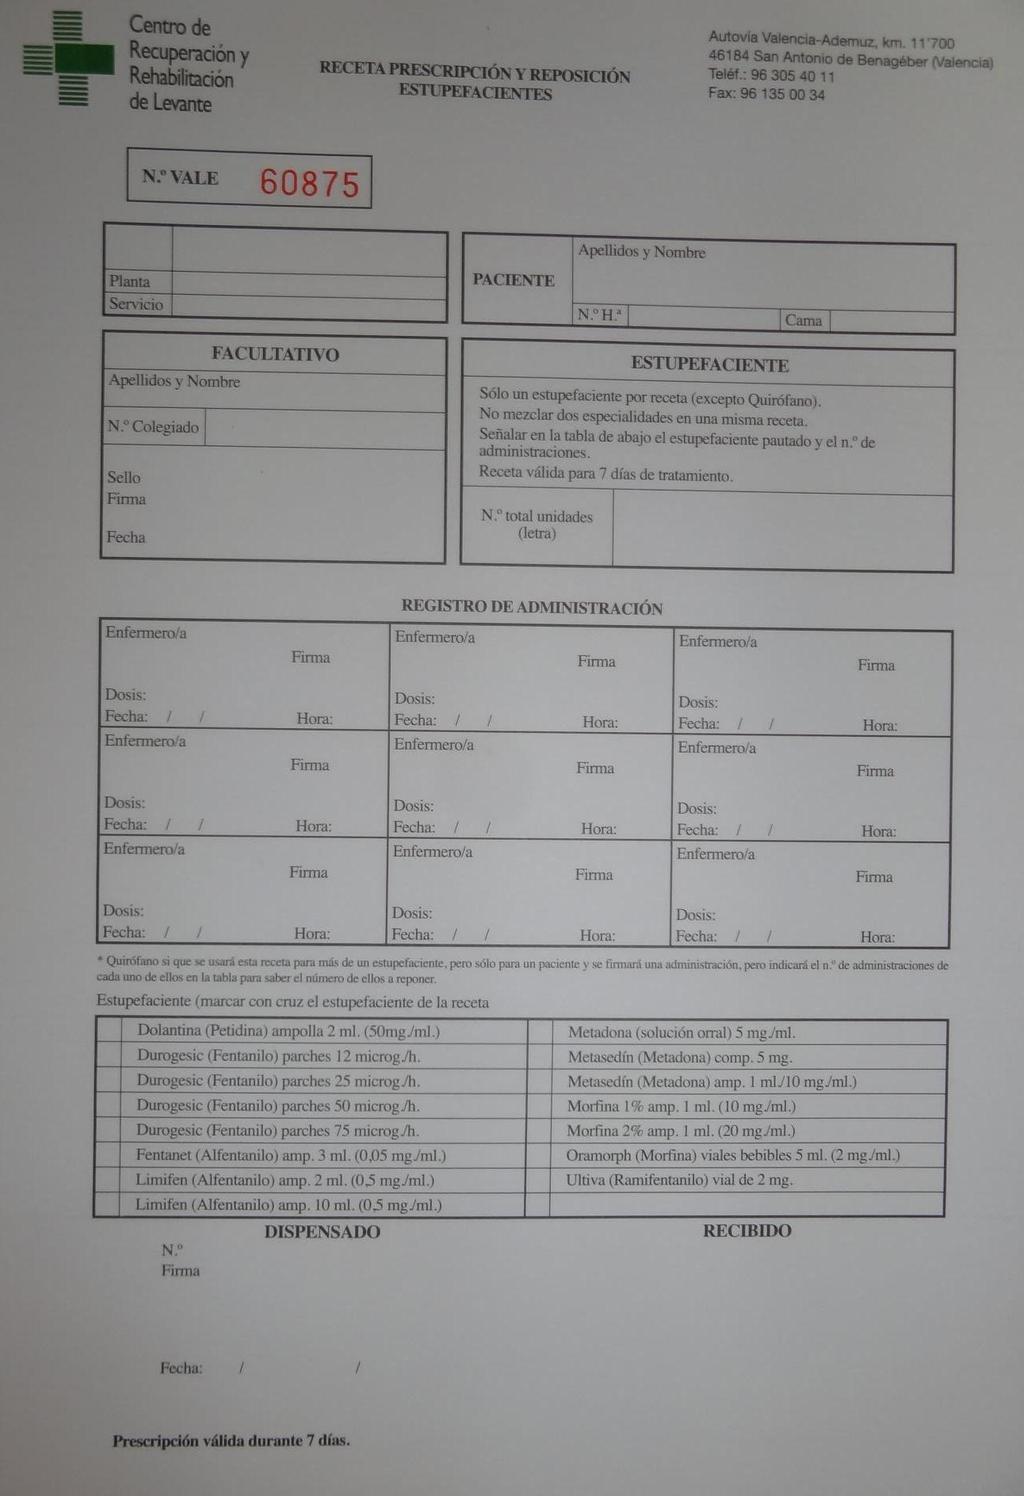 Relatório de Farmácia Hospitalar no Hospital Intermutual de Levante 2014/2015 Anexo V: Receta de prescripción y reposición de